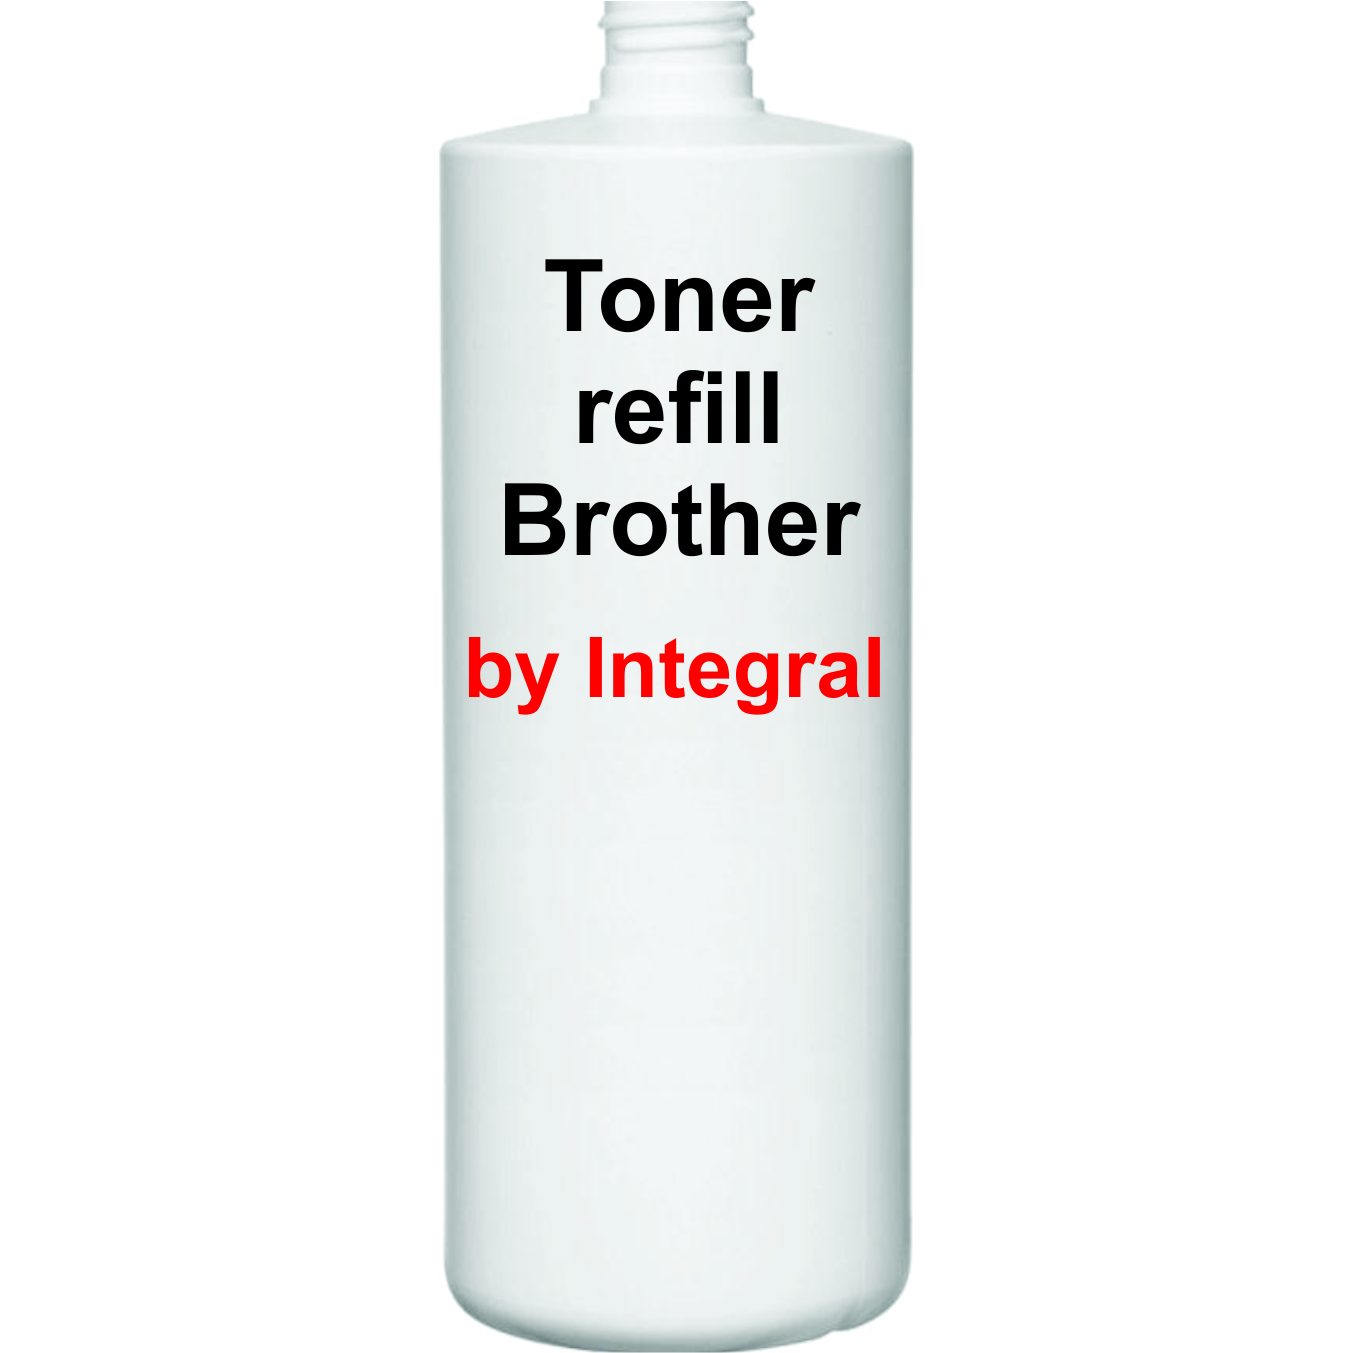 Toner refill Brother TN1030 TN-1030 1000g by Integral